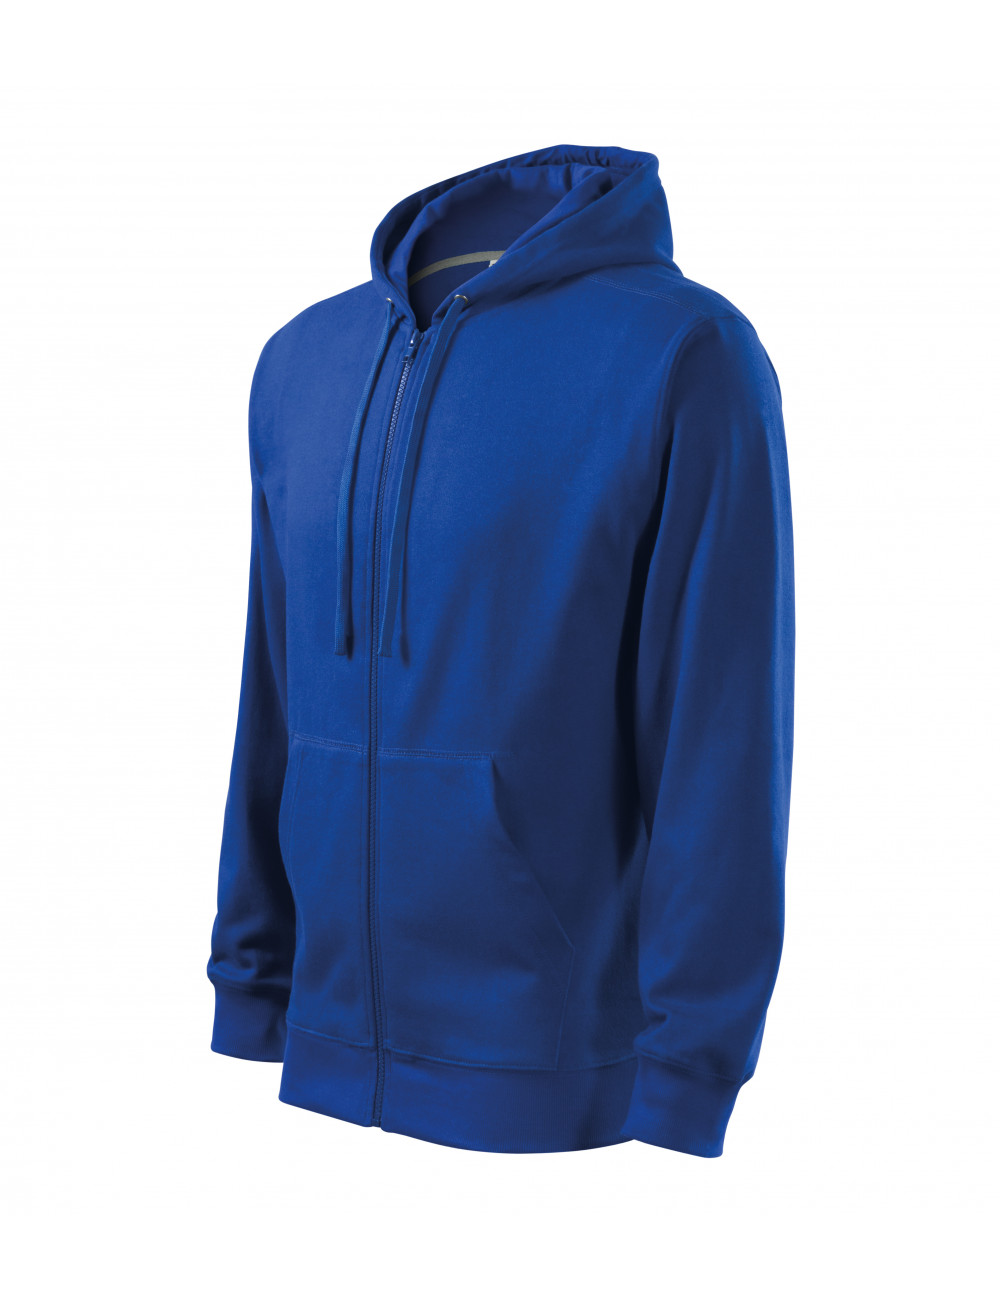 Men`s sweatshirt trendy zipper 410 cornflower blue Adler Malfini